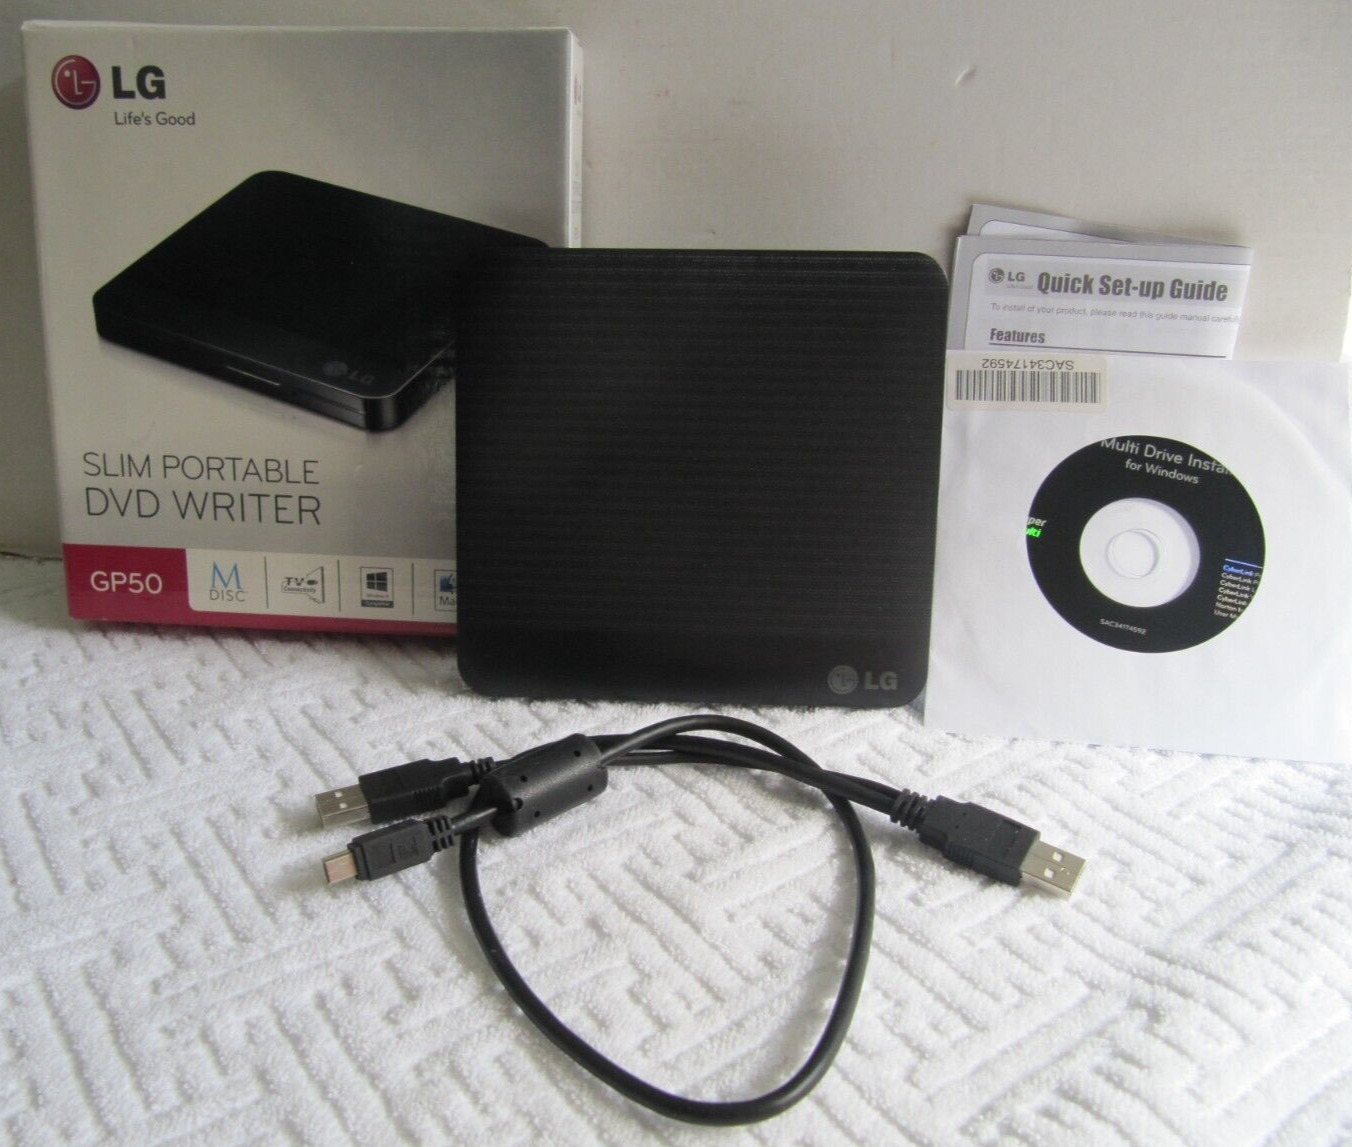 LG Slim Portable DVD Writer GP50 Brand New In Open Box Windows, Mac Compatible